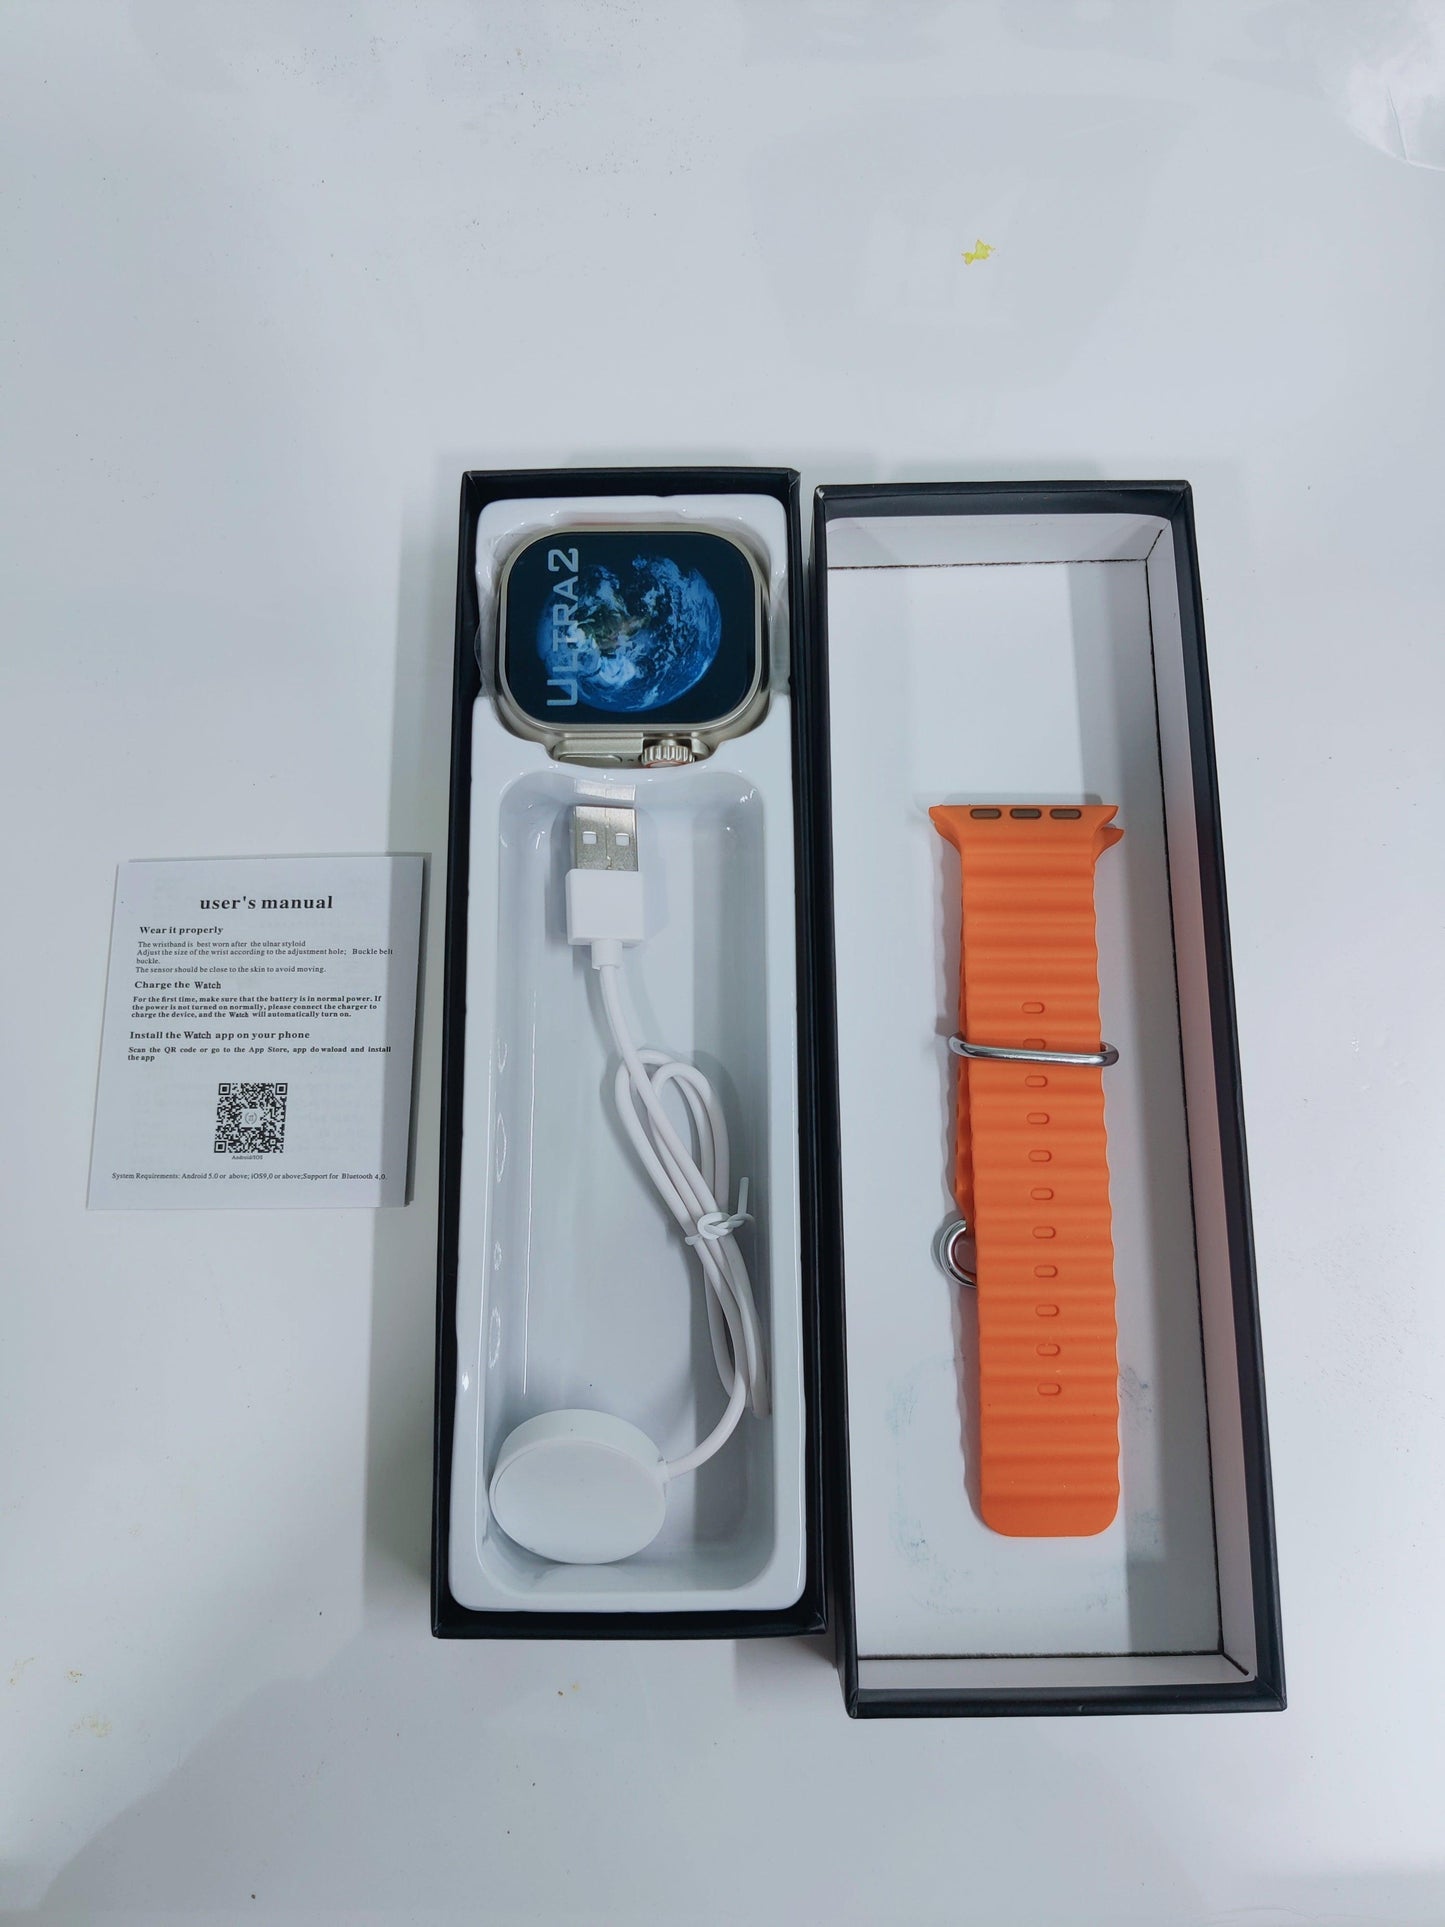 T900 Ultra 2 smartwatch - HT Bazar